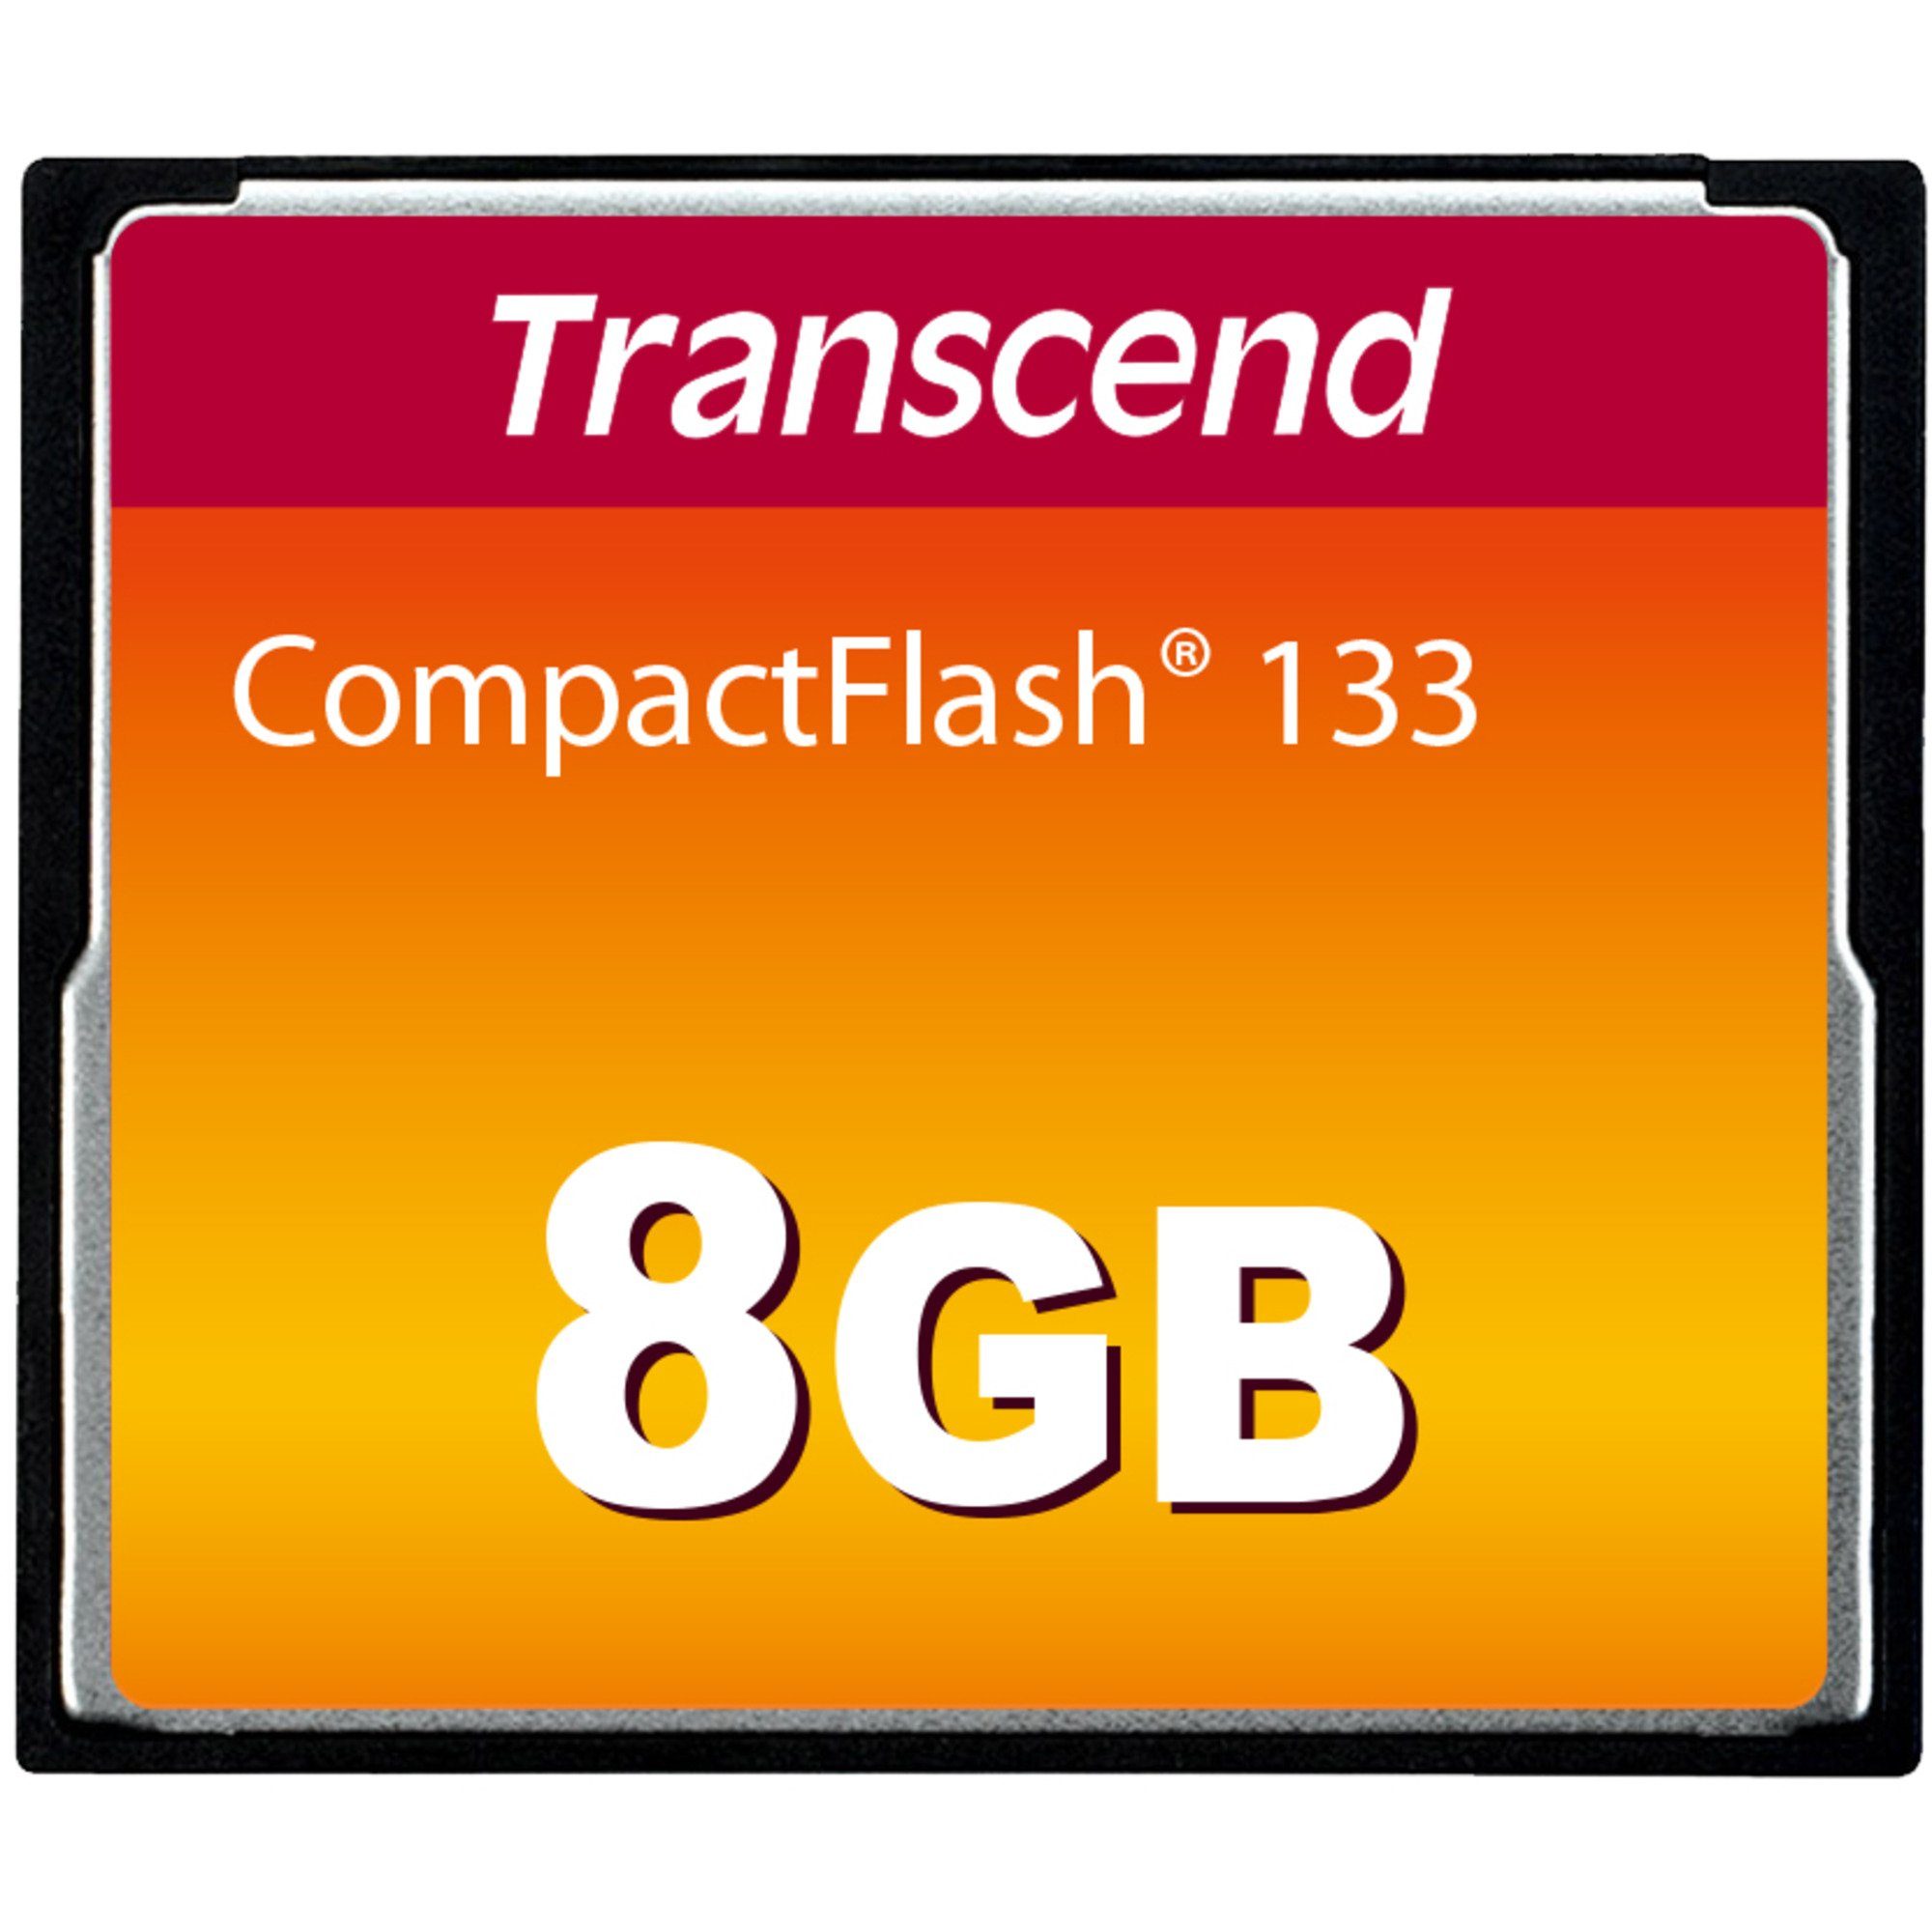 Transcend CompactFlash 133 8 GB Speicherkarte